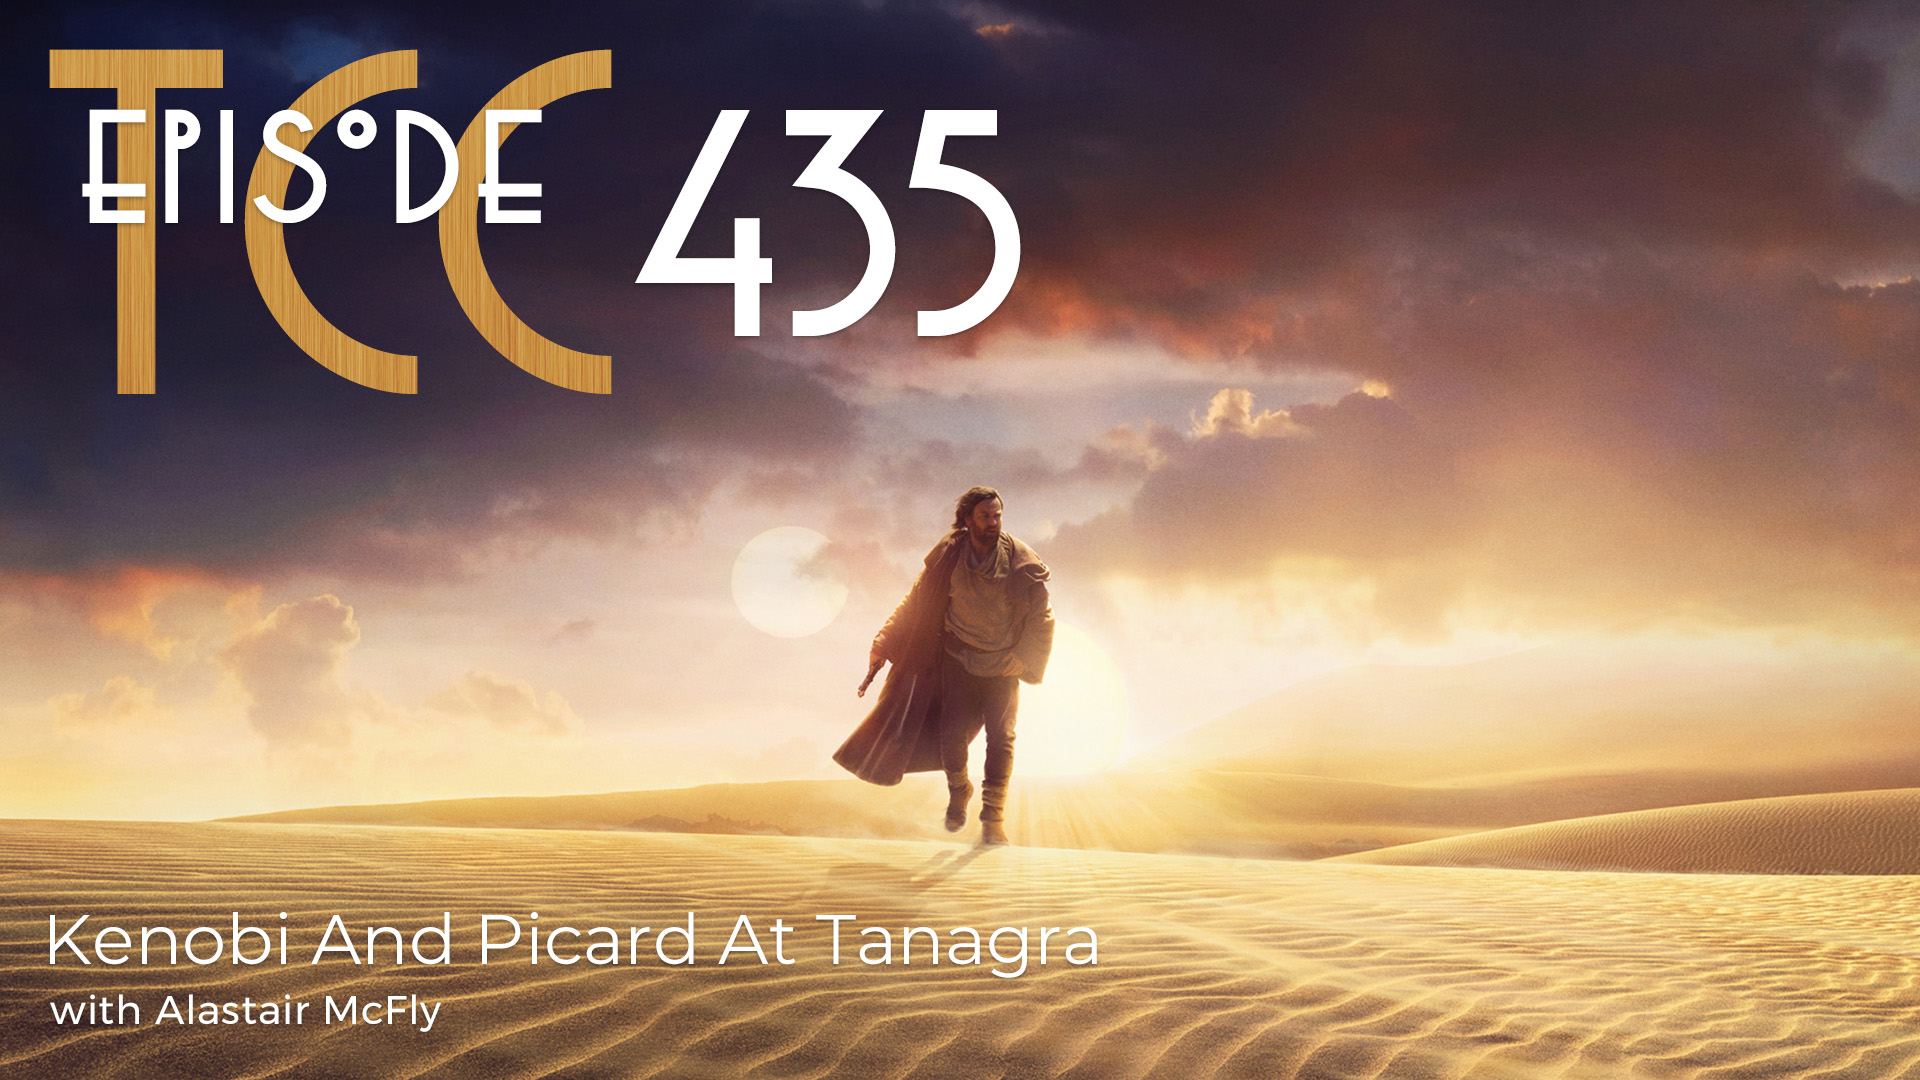 The Citadel Cafe 435: Kenobi And Picard At Tanagra